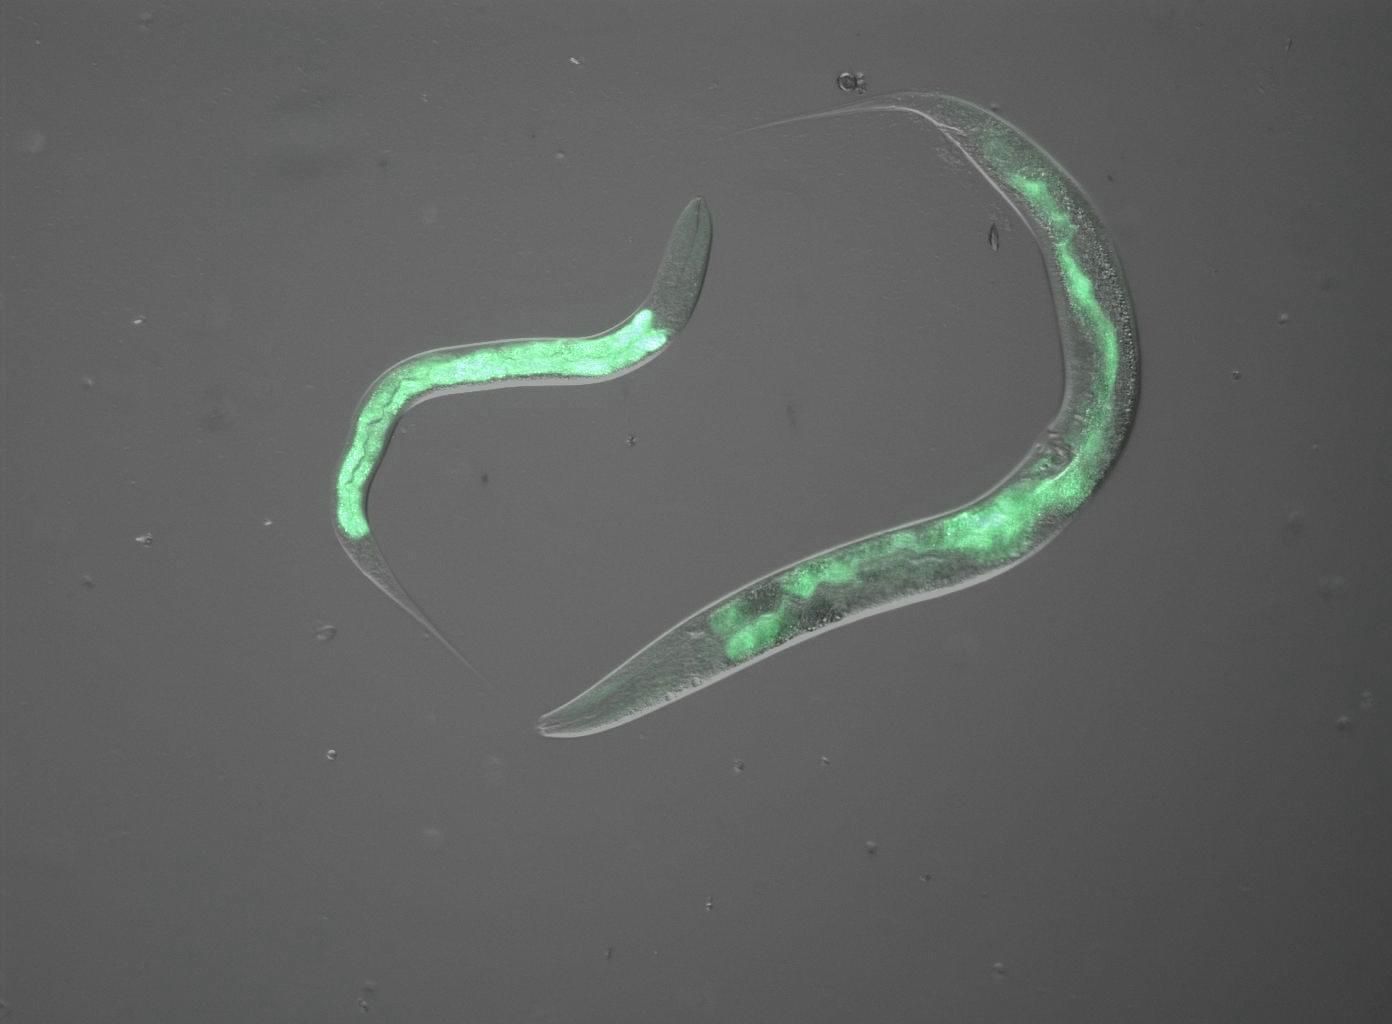 Using C. elegans instead of higher developed animals